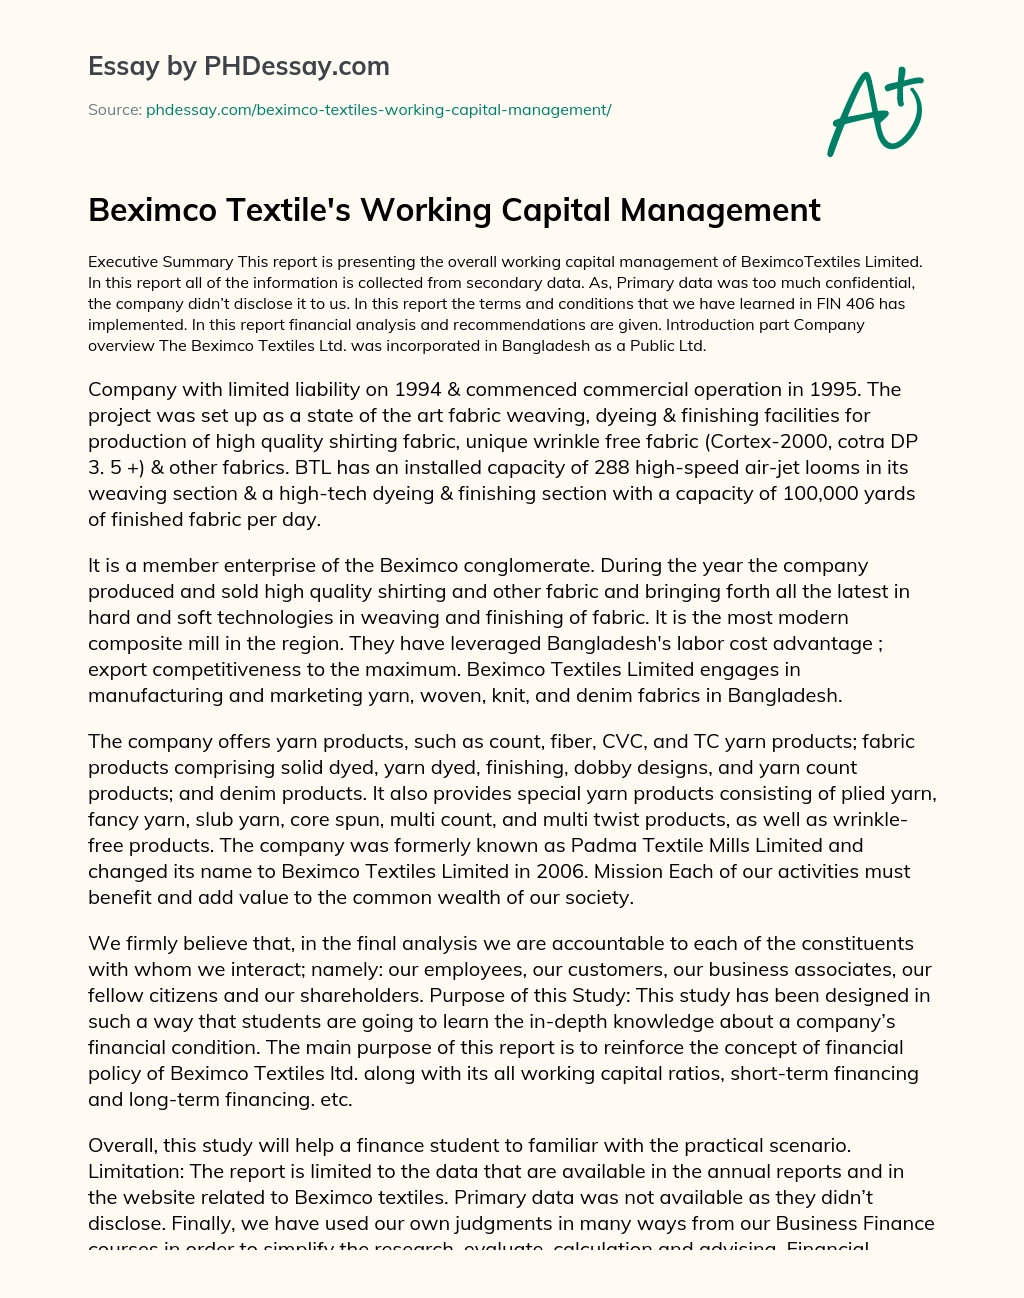 Beximco Textile’s Working Capital Management essay